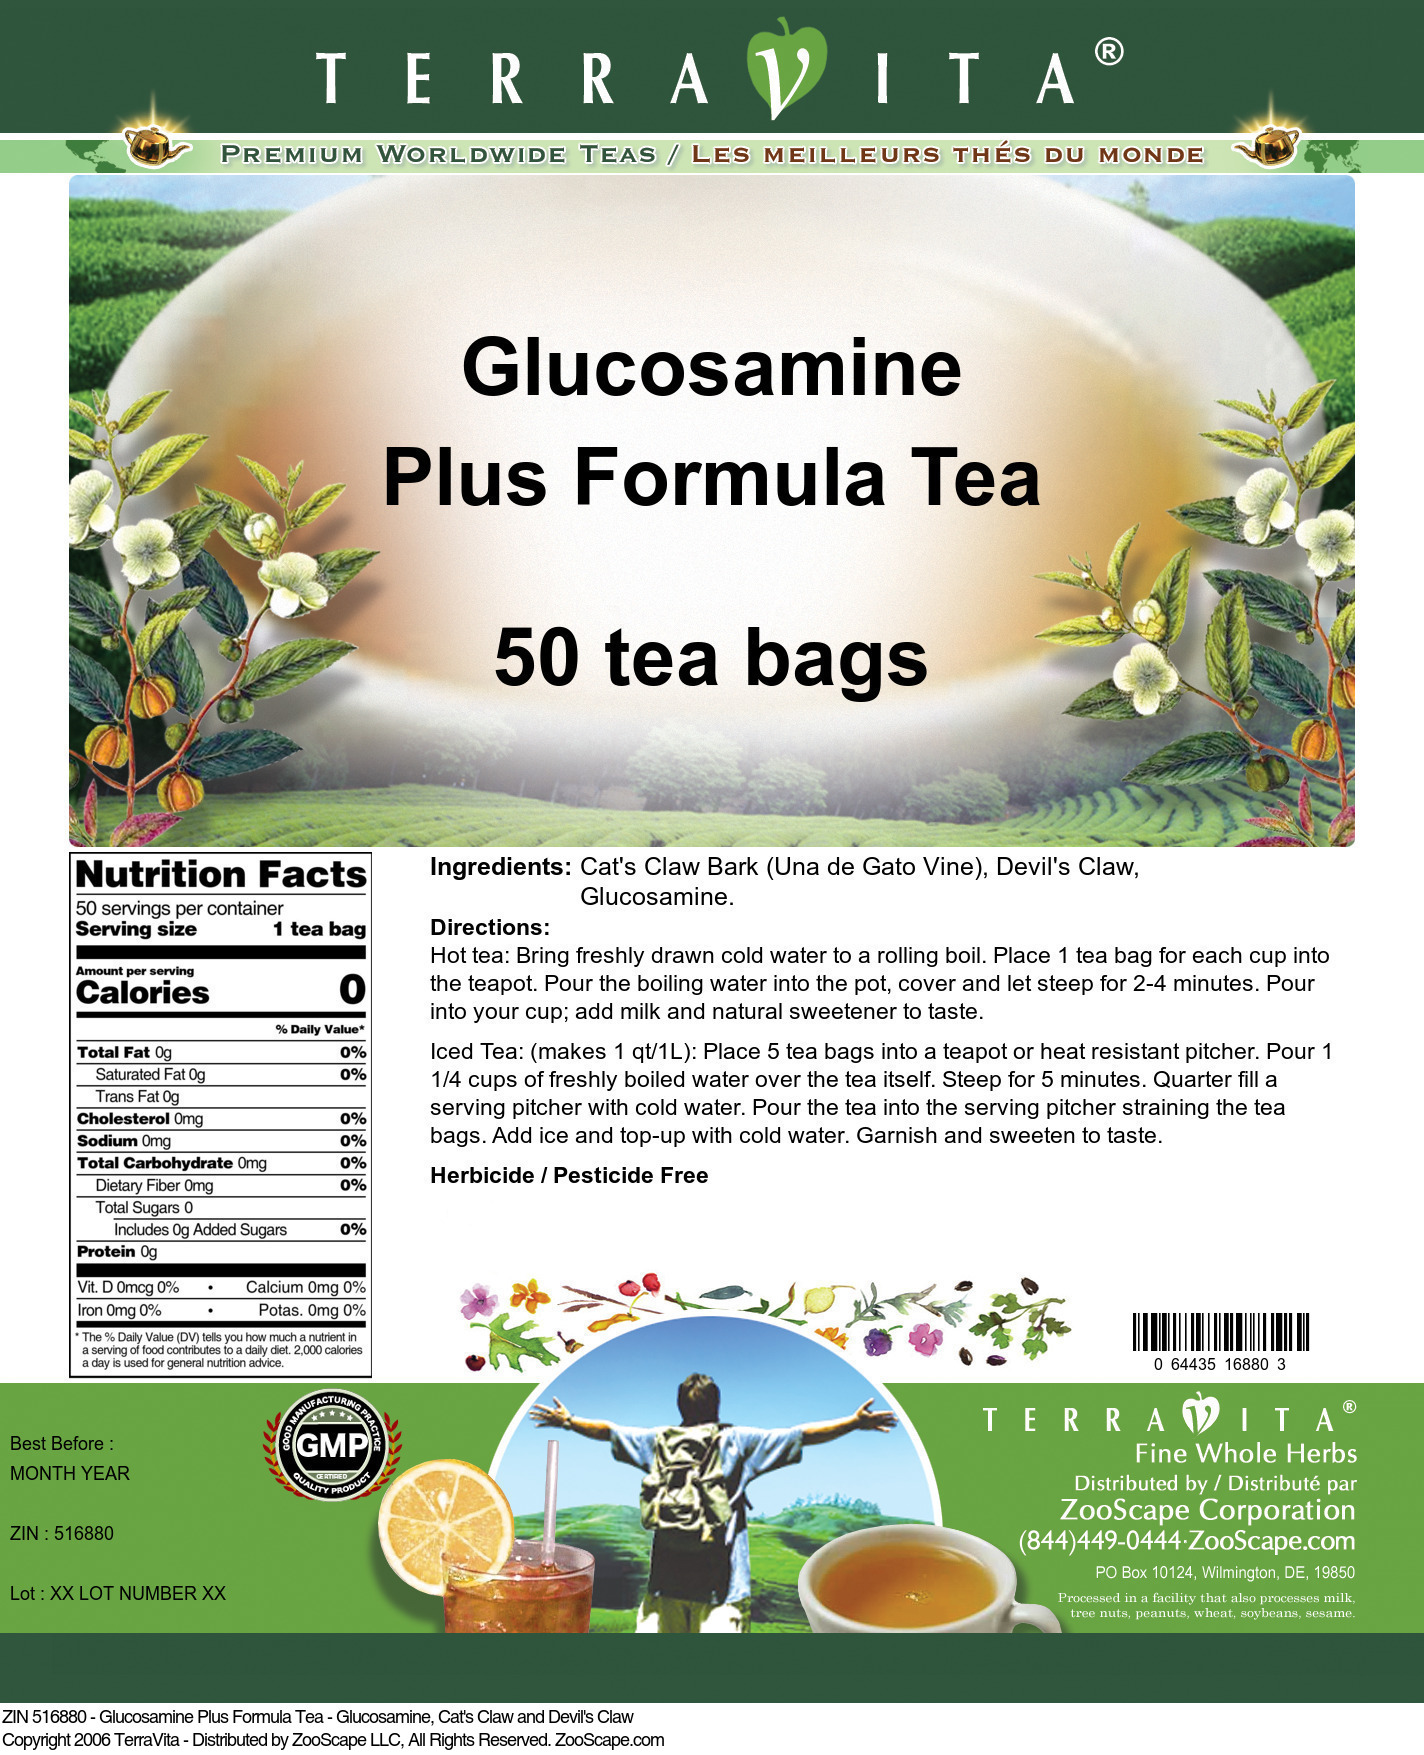 Glucosamine Plus Formula Tea - Glucosamine, Cat's Claw and Devil's Claw - Label